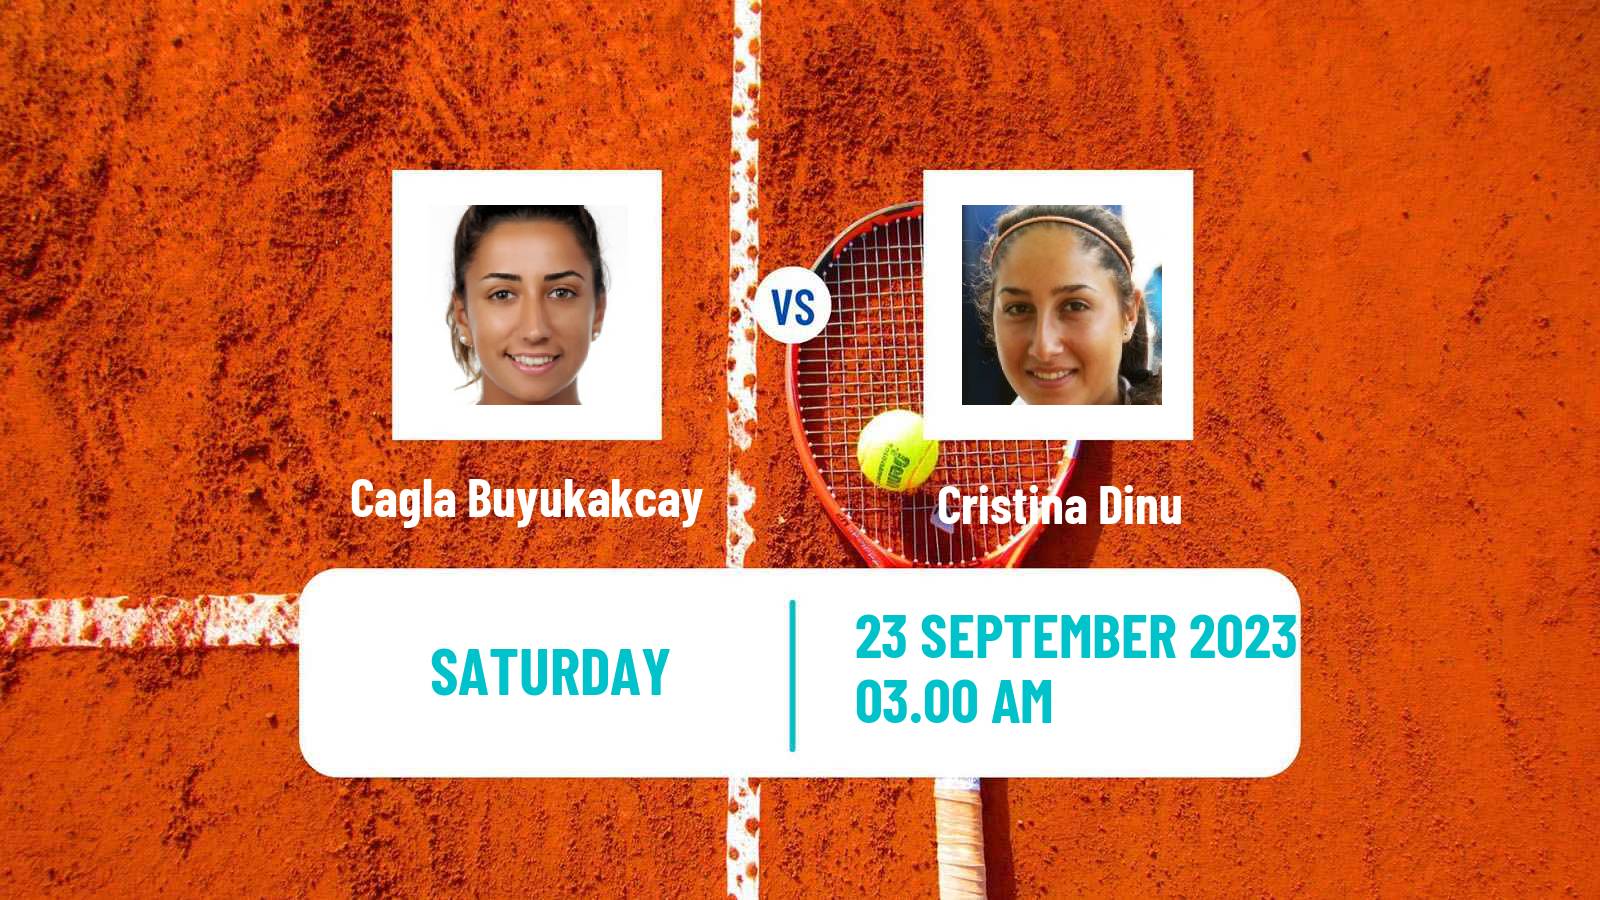 Tennis ITF W40 Pazardzhik Women Cagla Buyukakcay - Cristina Dinu